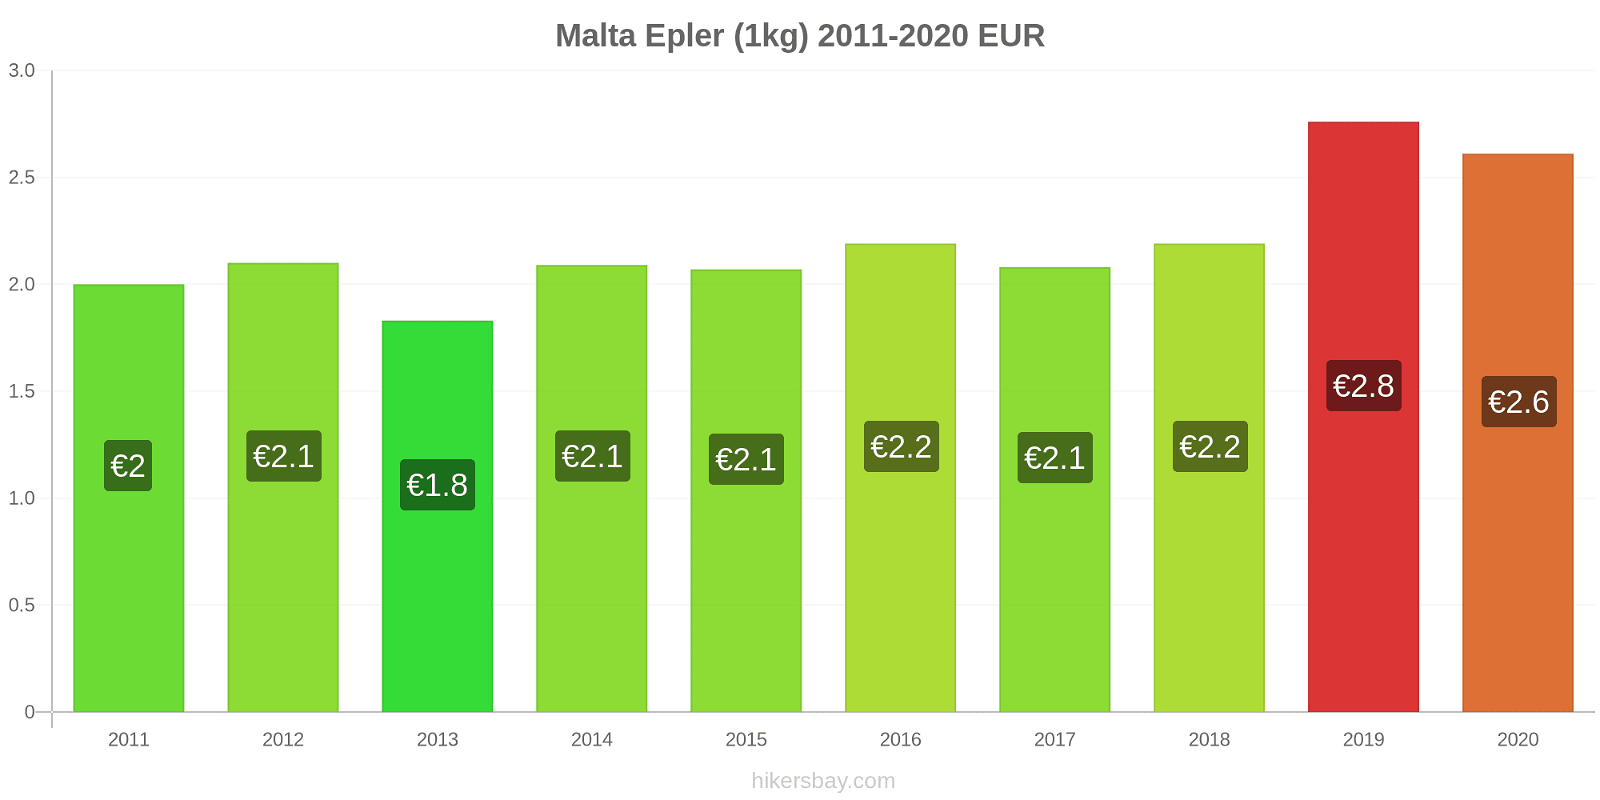 Malta prisendringer Epler (1kg) hikersbay.com